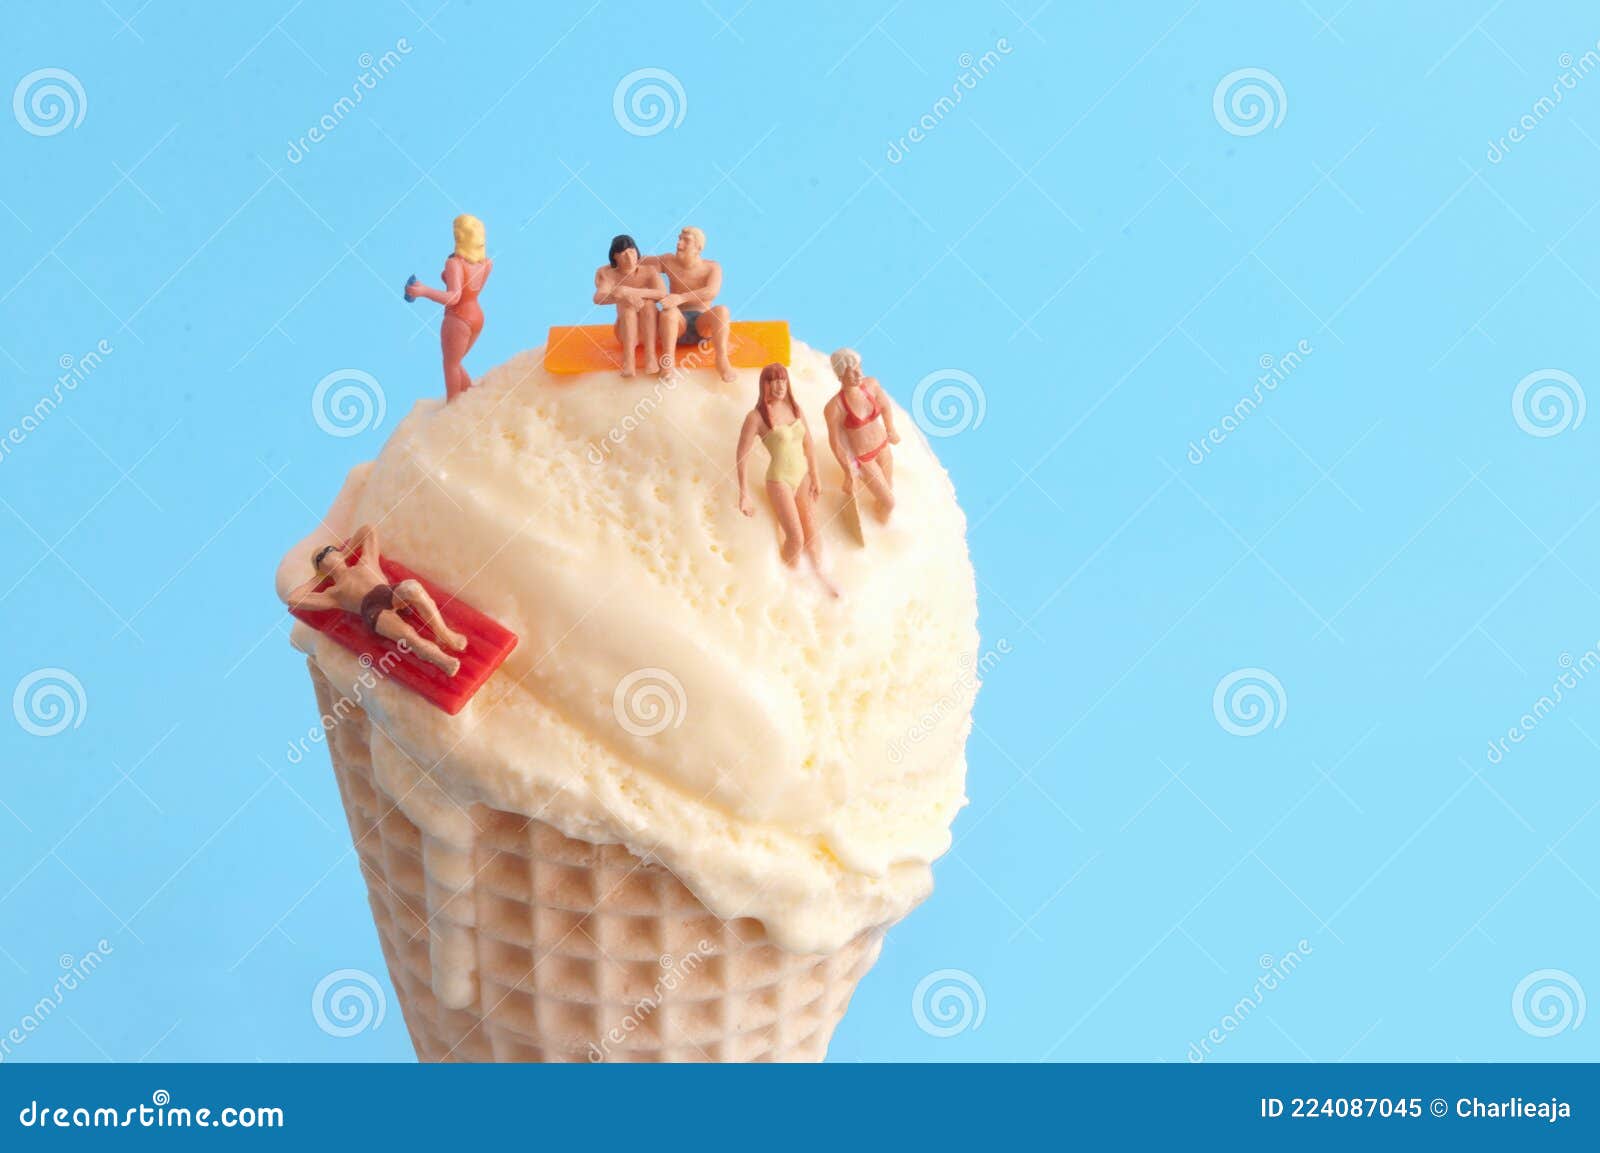 smmer sunbathers in ice cream